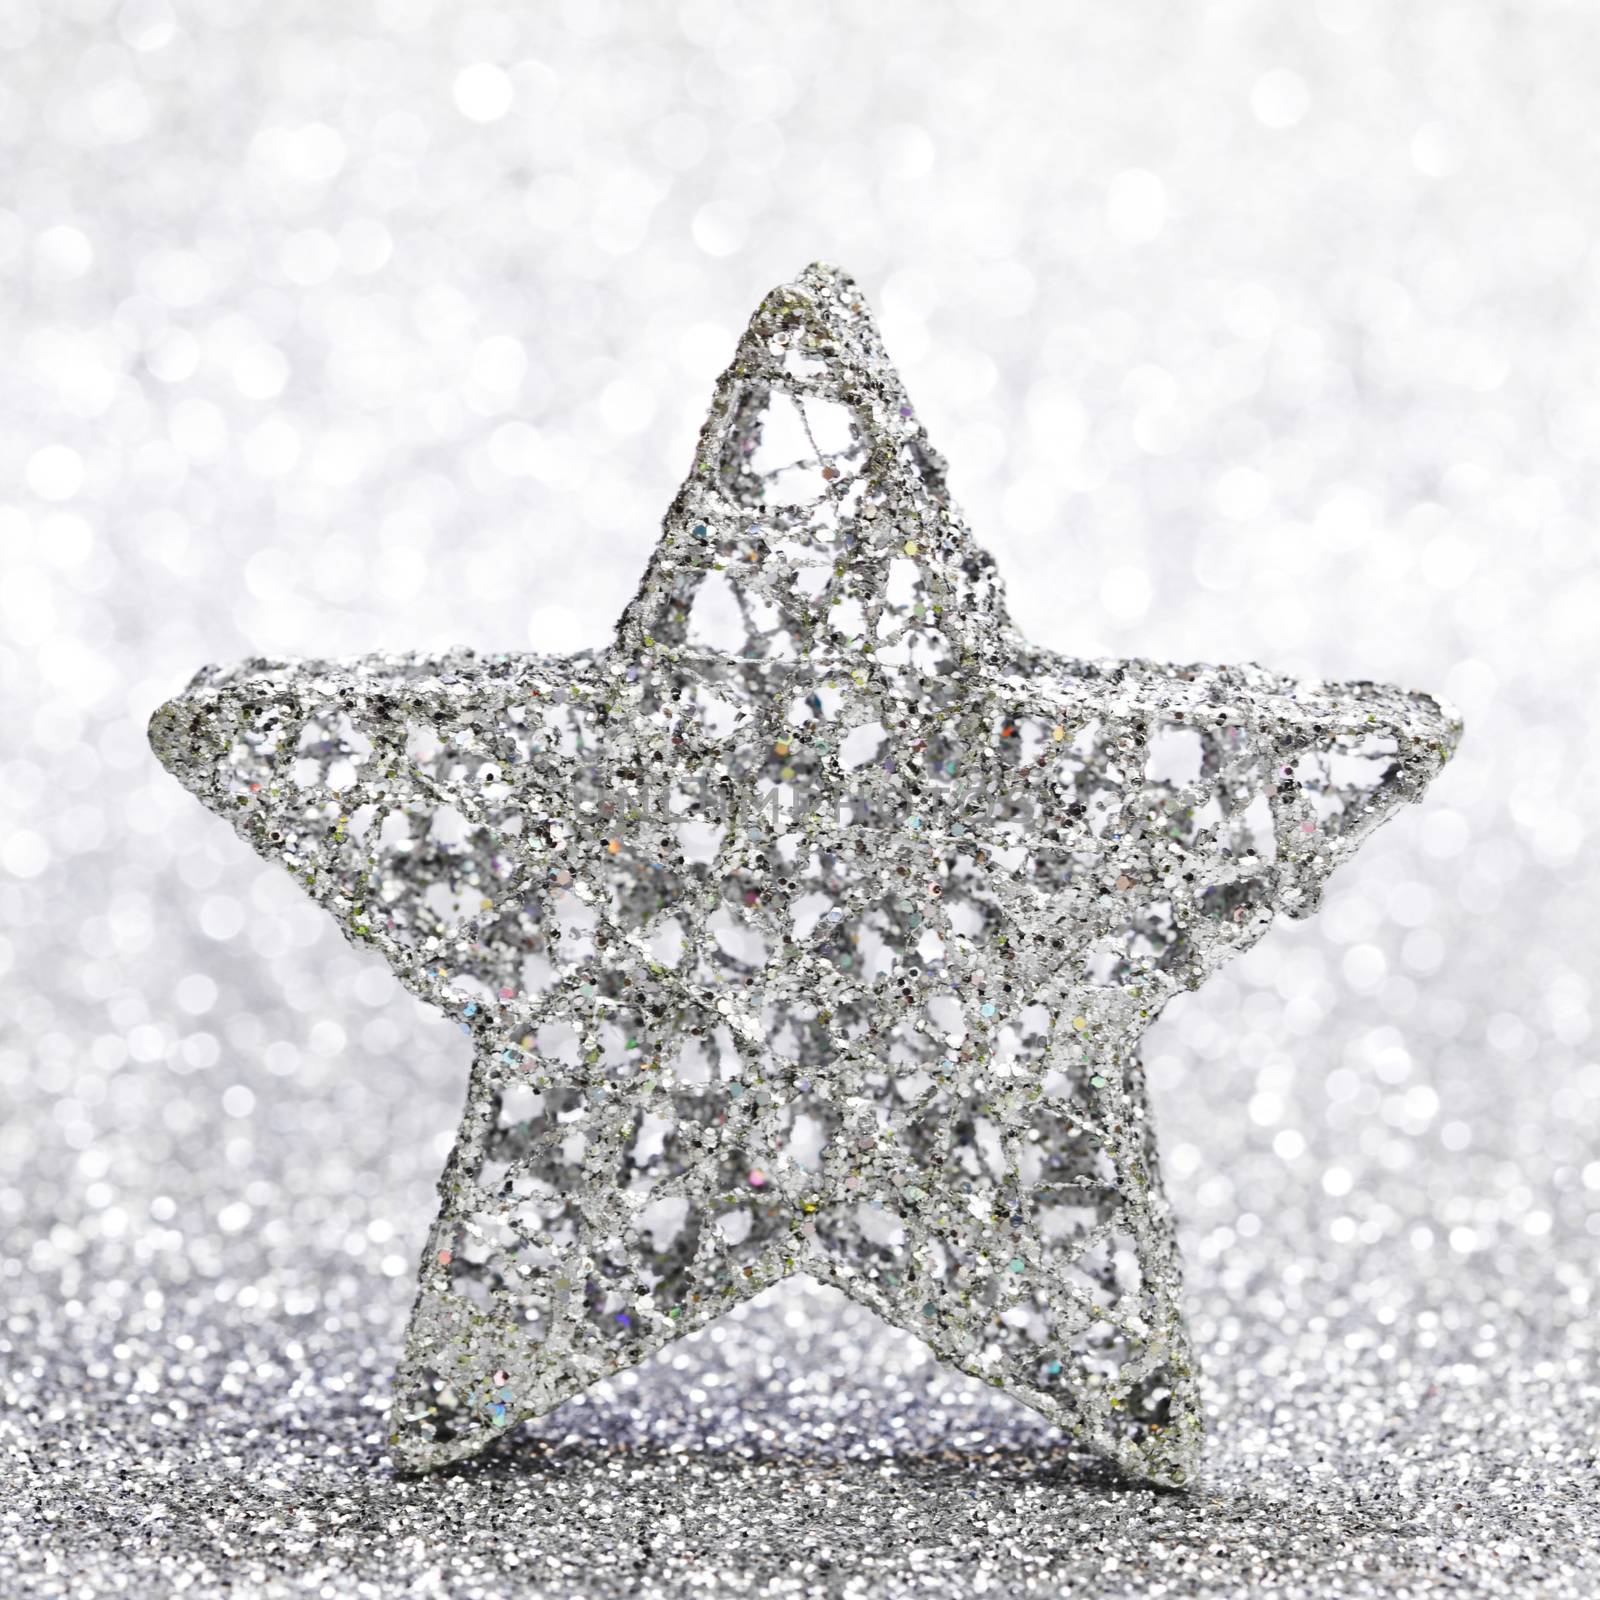 Beautiful christmas star decoration over shiny glitter background